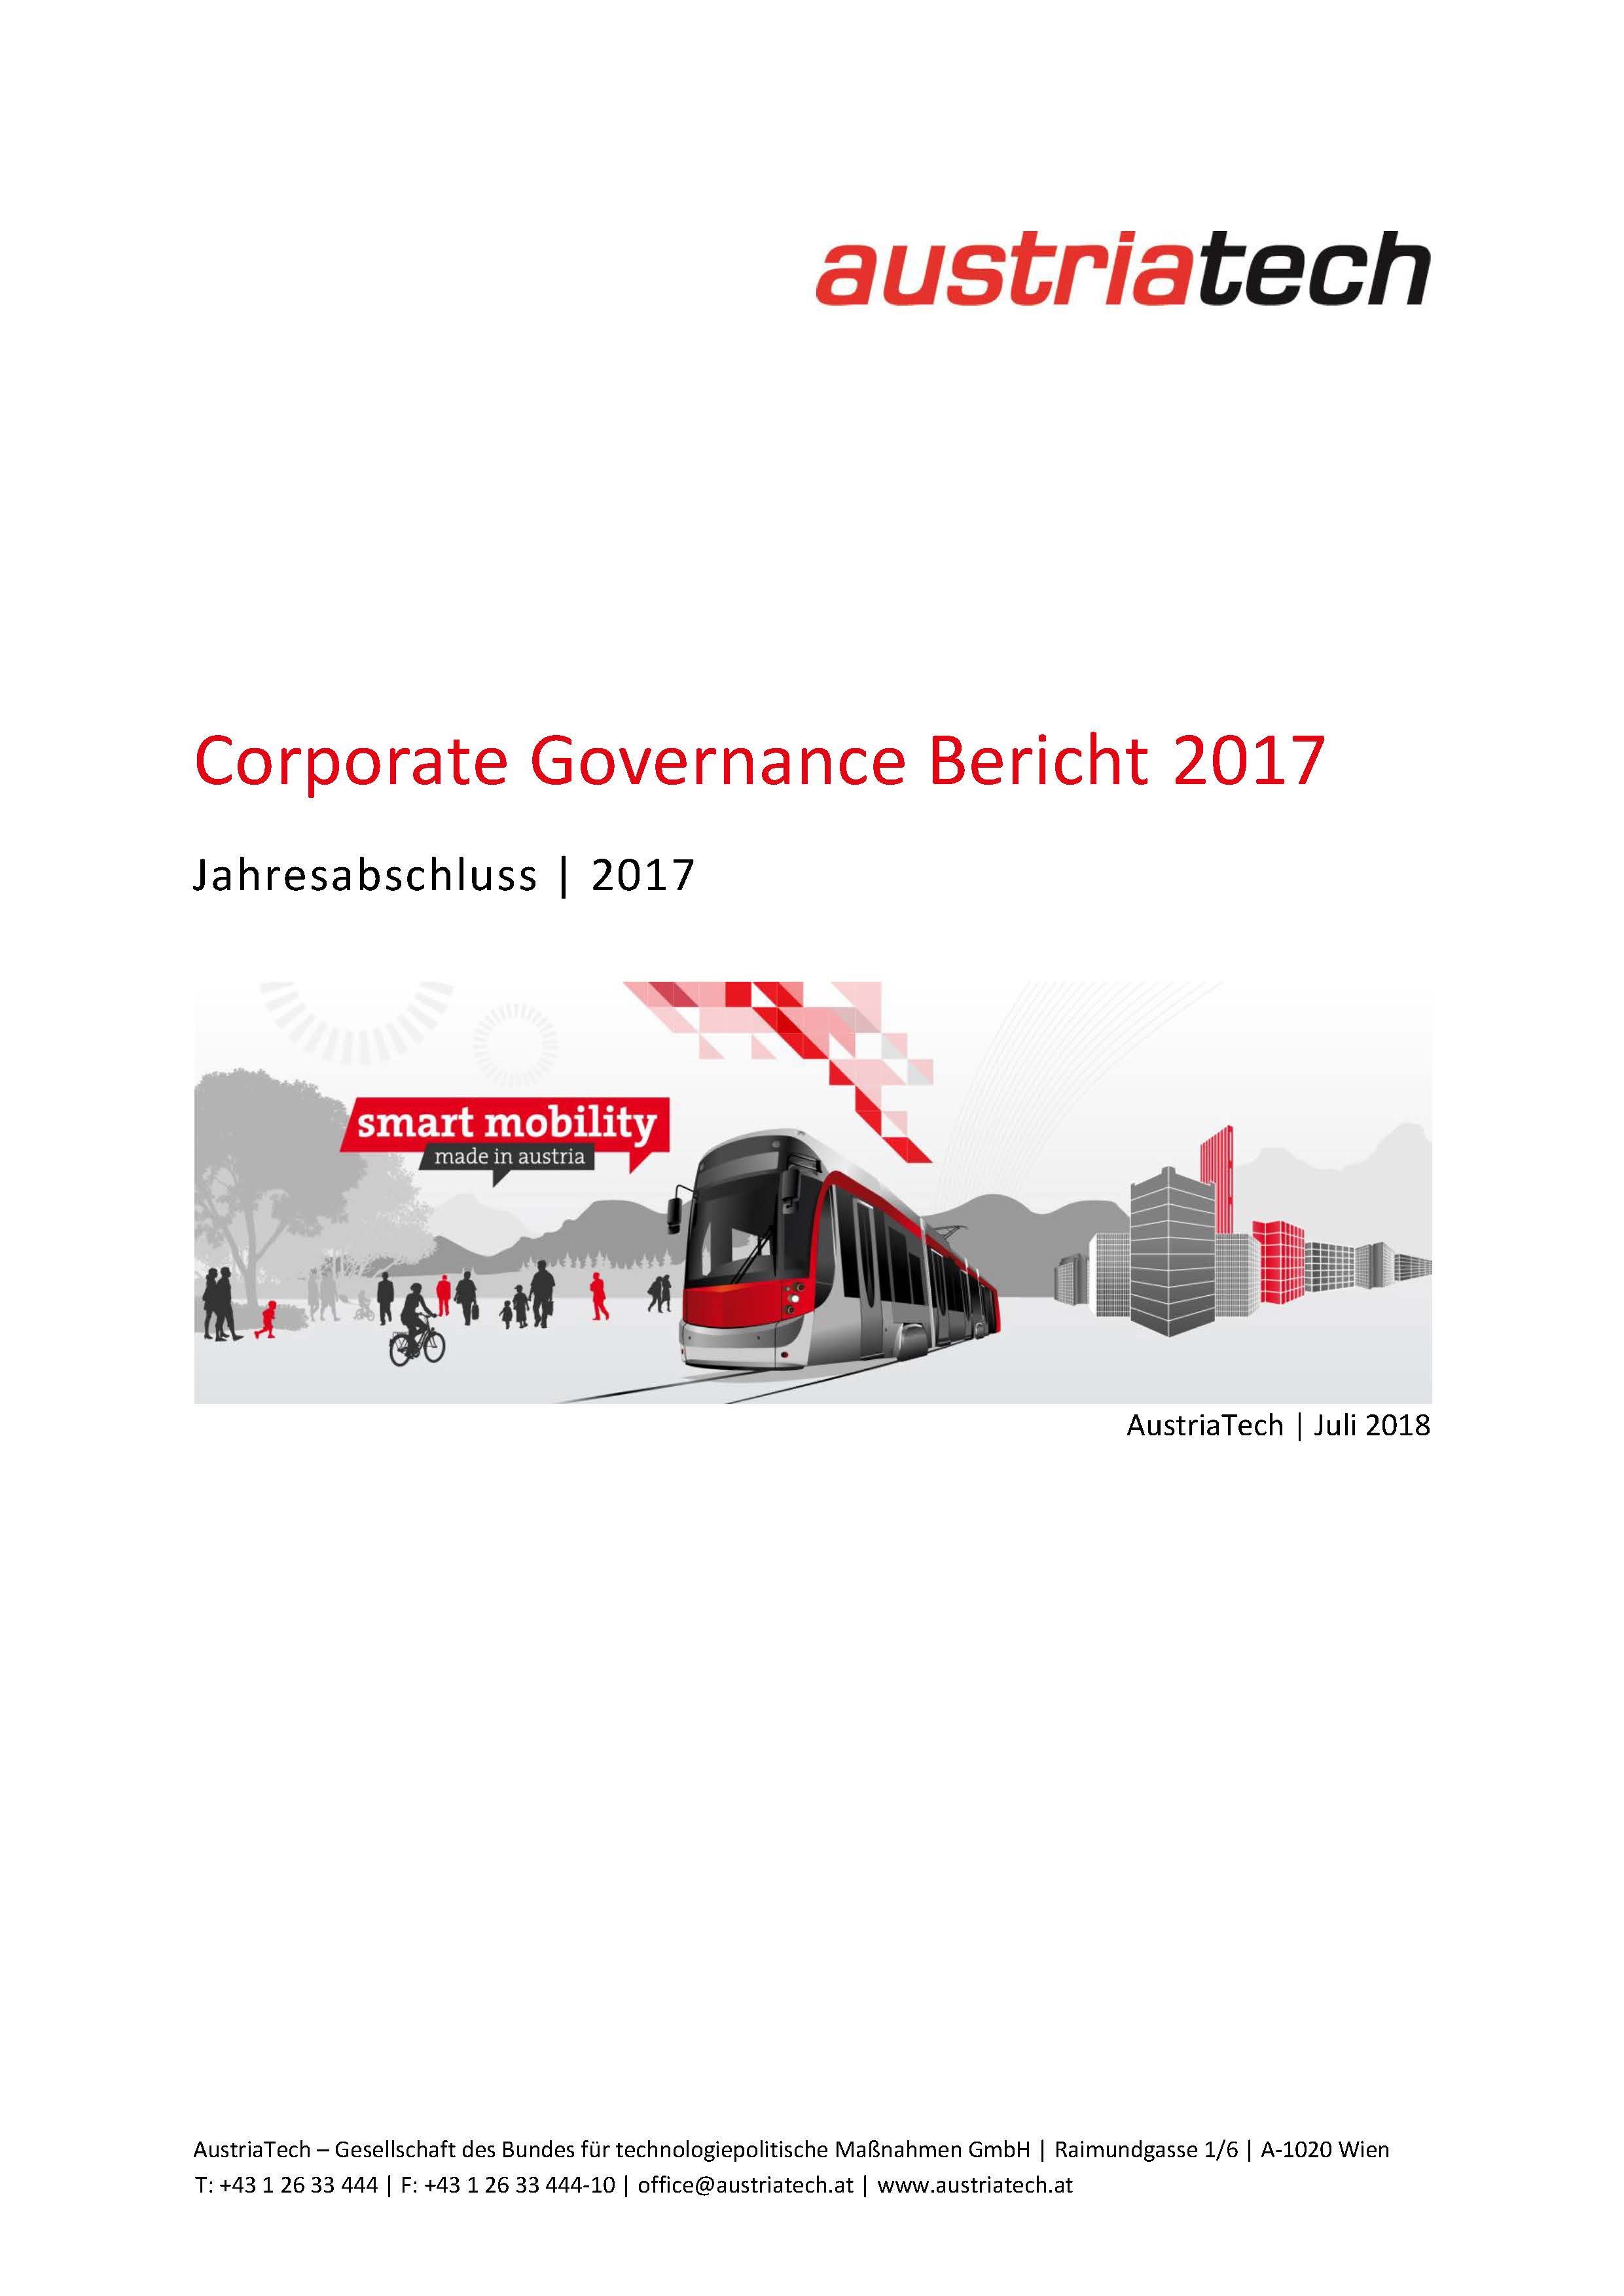 AustriaTech Corporate Governance 2017